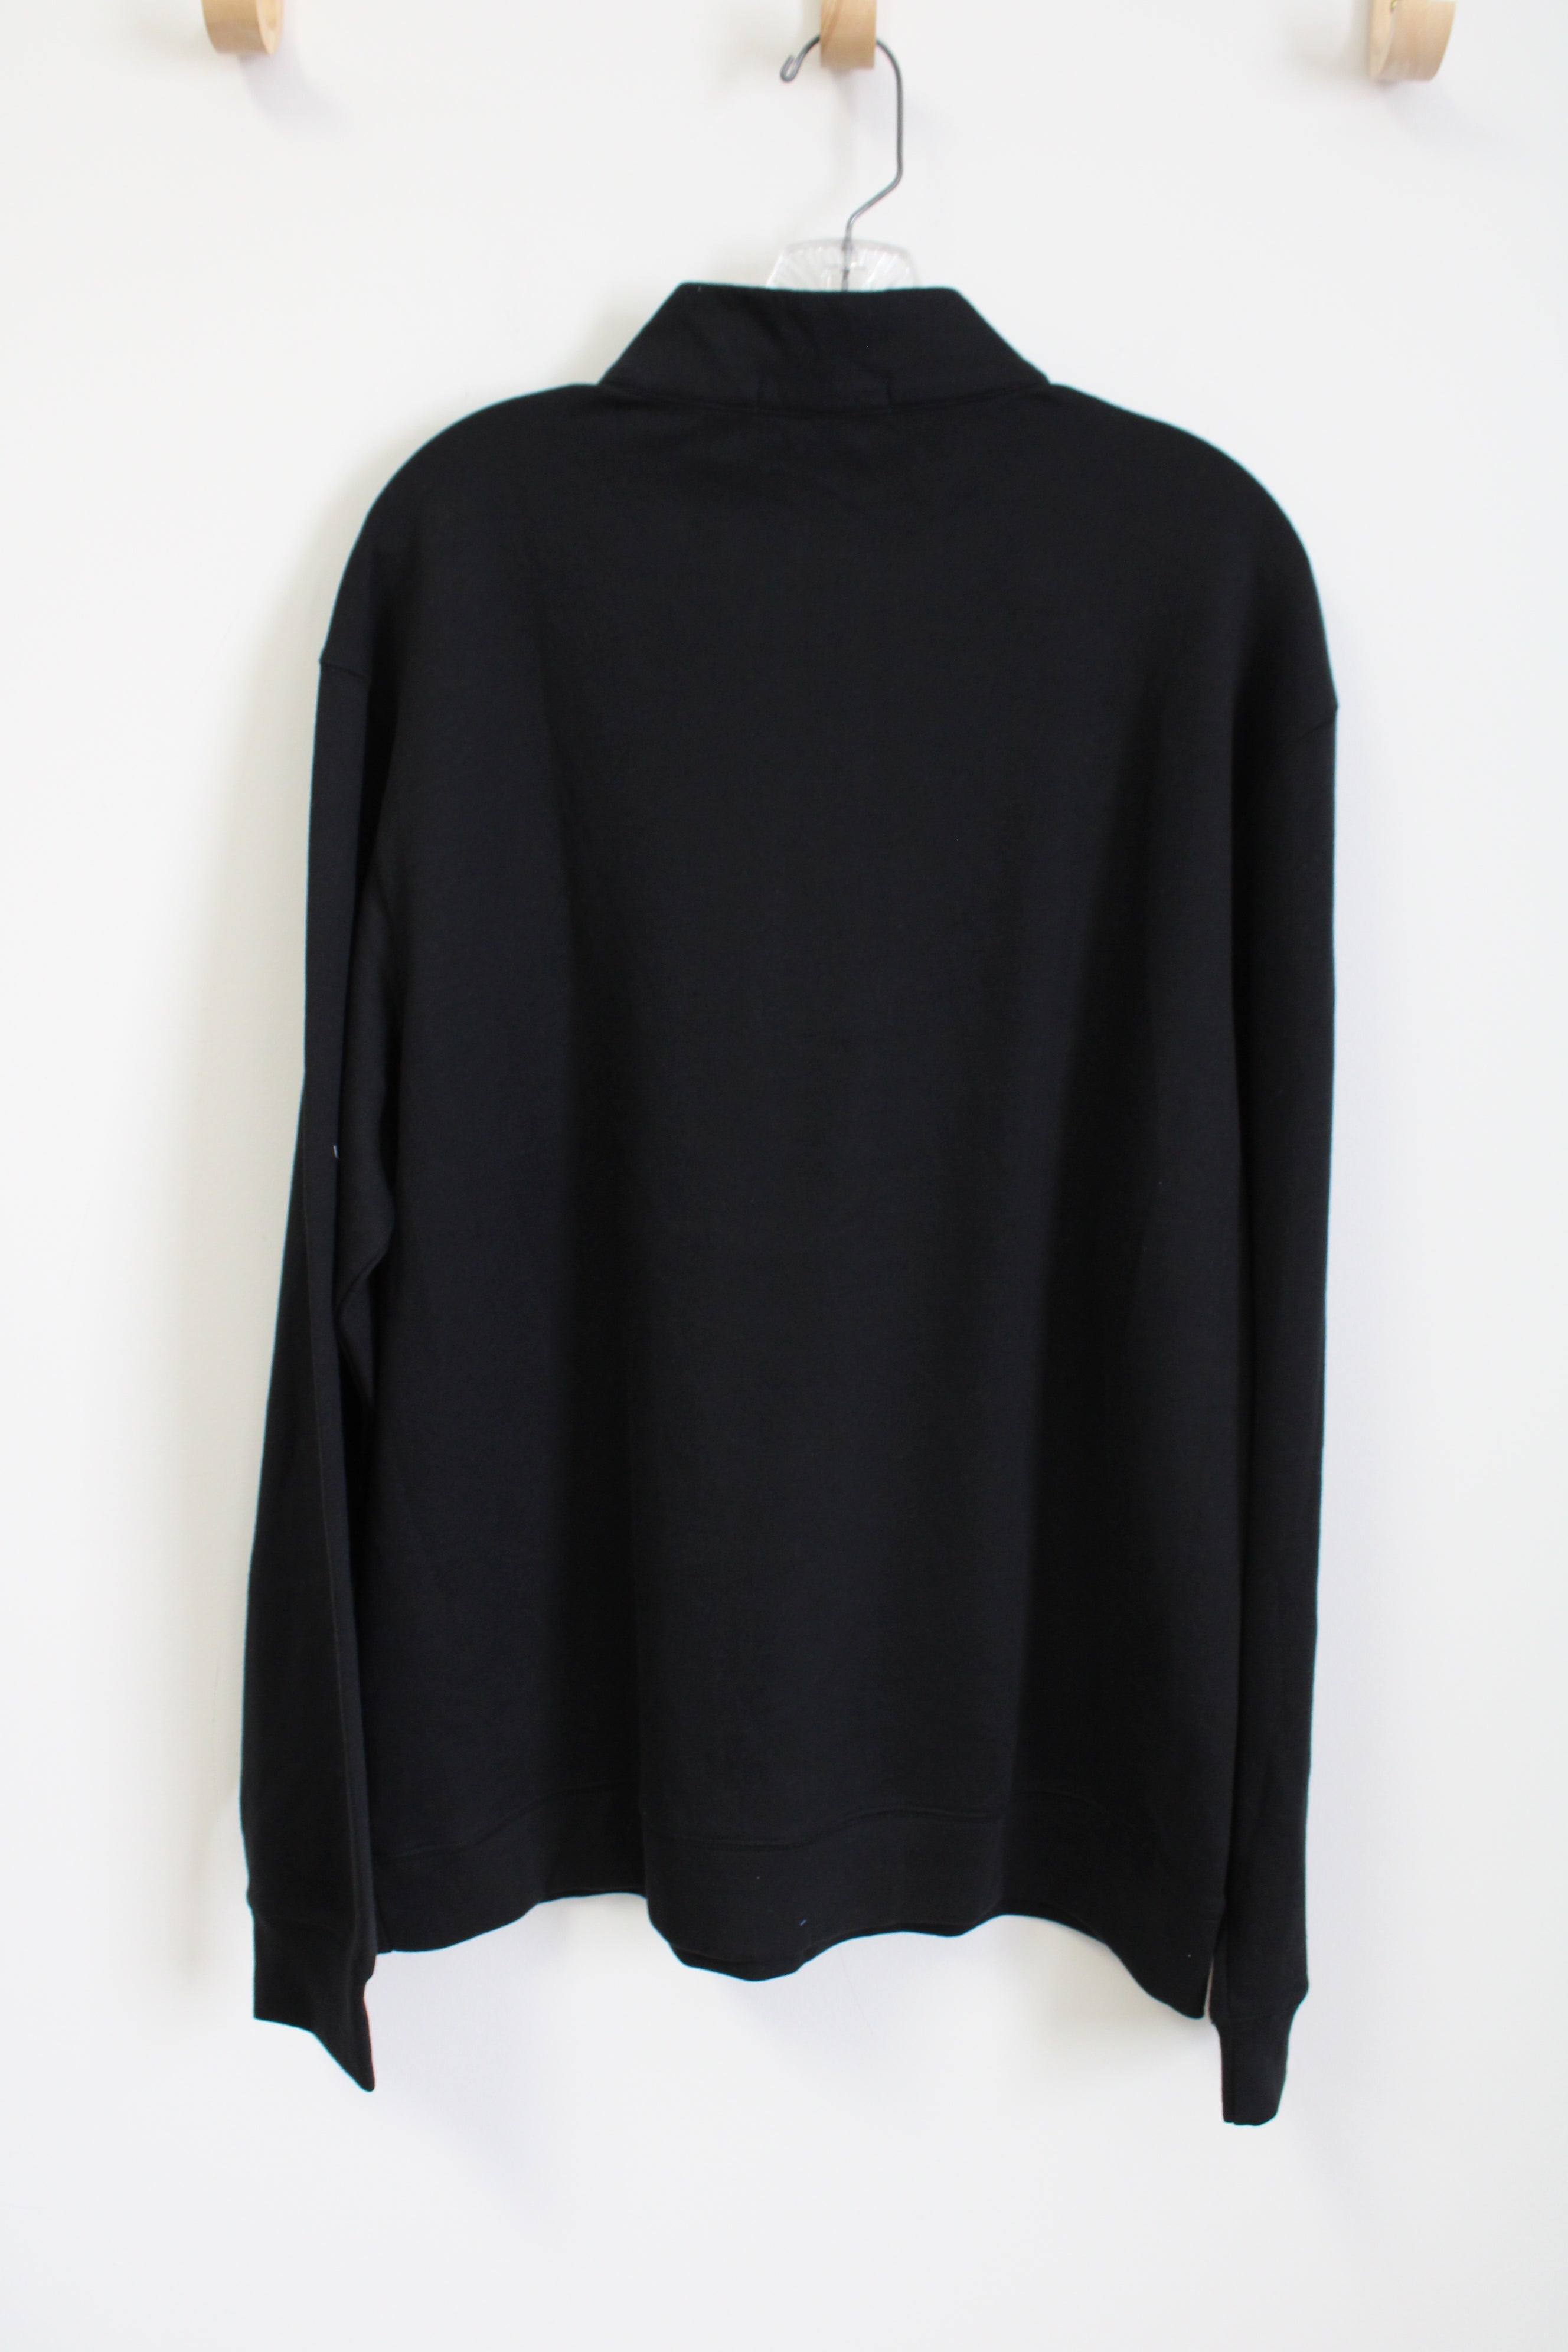 Port Authority Black 1/4 Zip Soft Pullover Sweatshirt | L